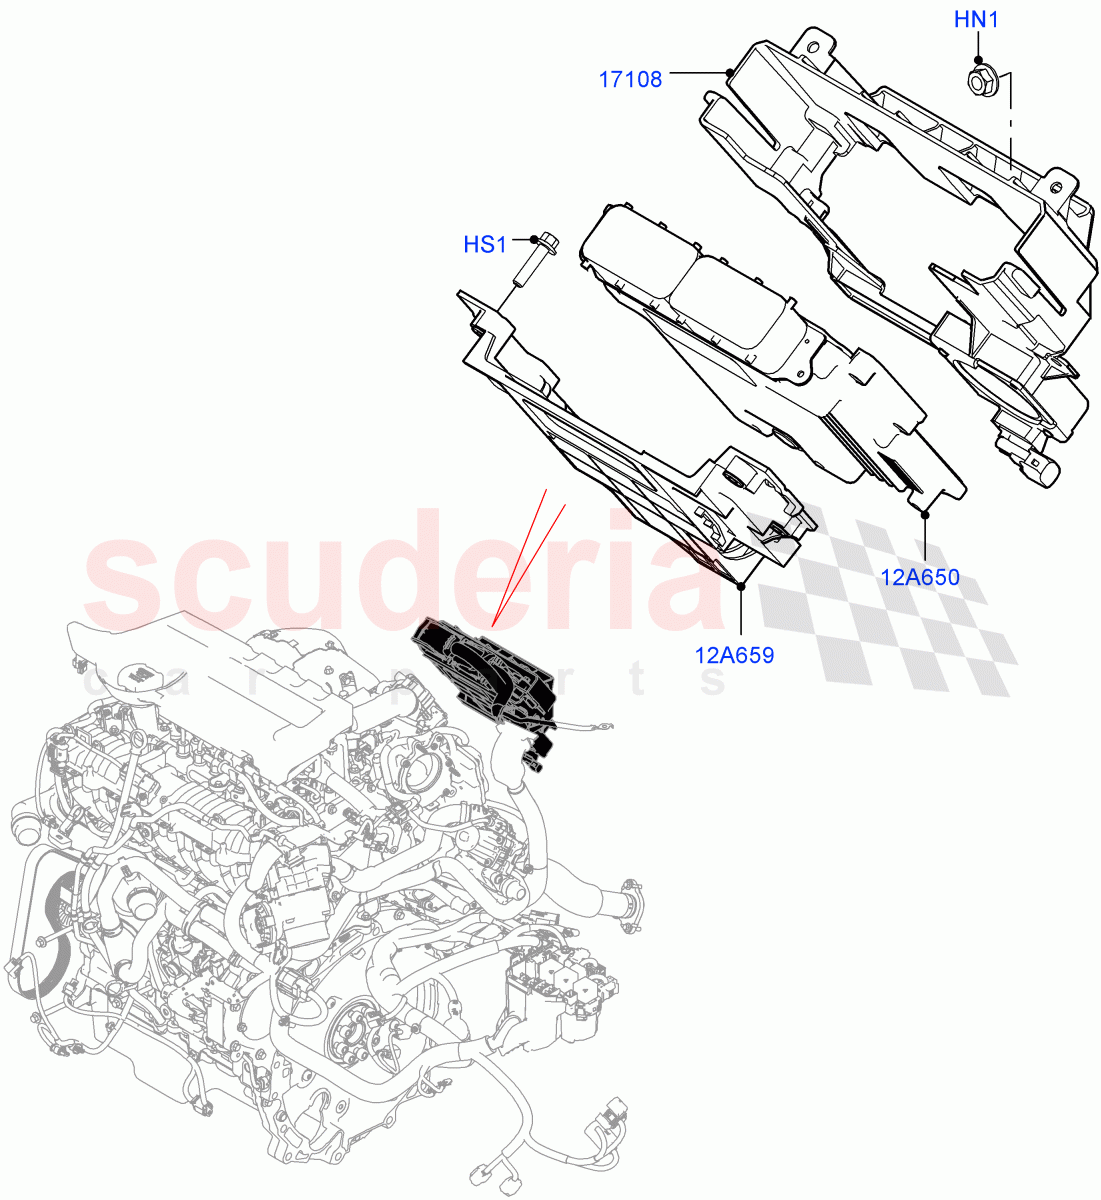 Engine Modules And Sensors(2.0L AJ20P4 Petrol Mid PTA,Changsu (China)) of Land Rover Land Rover Discovery Sport (2015+) [2.0 Turbo Petrol AJ200P]